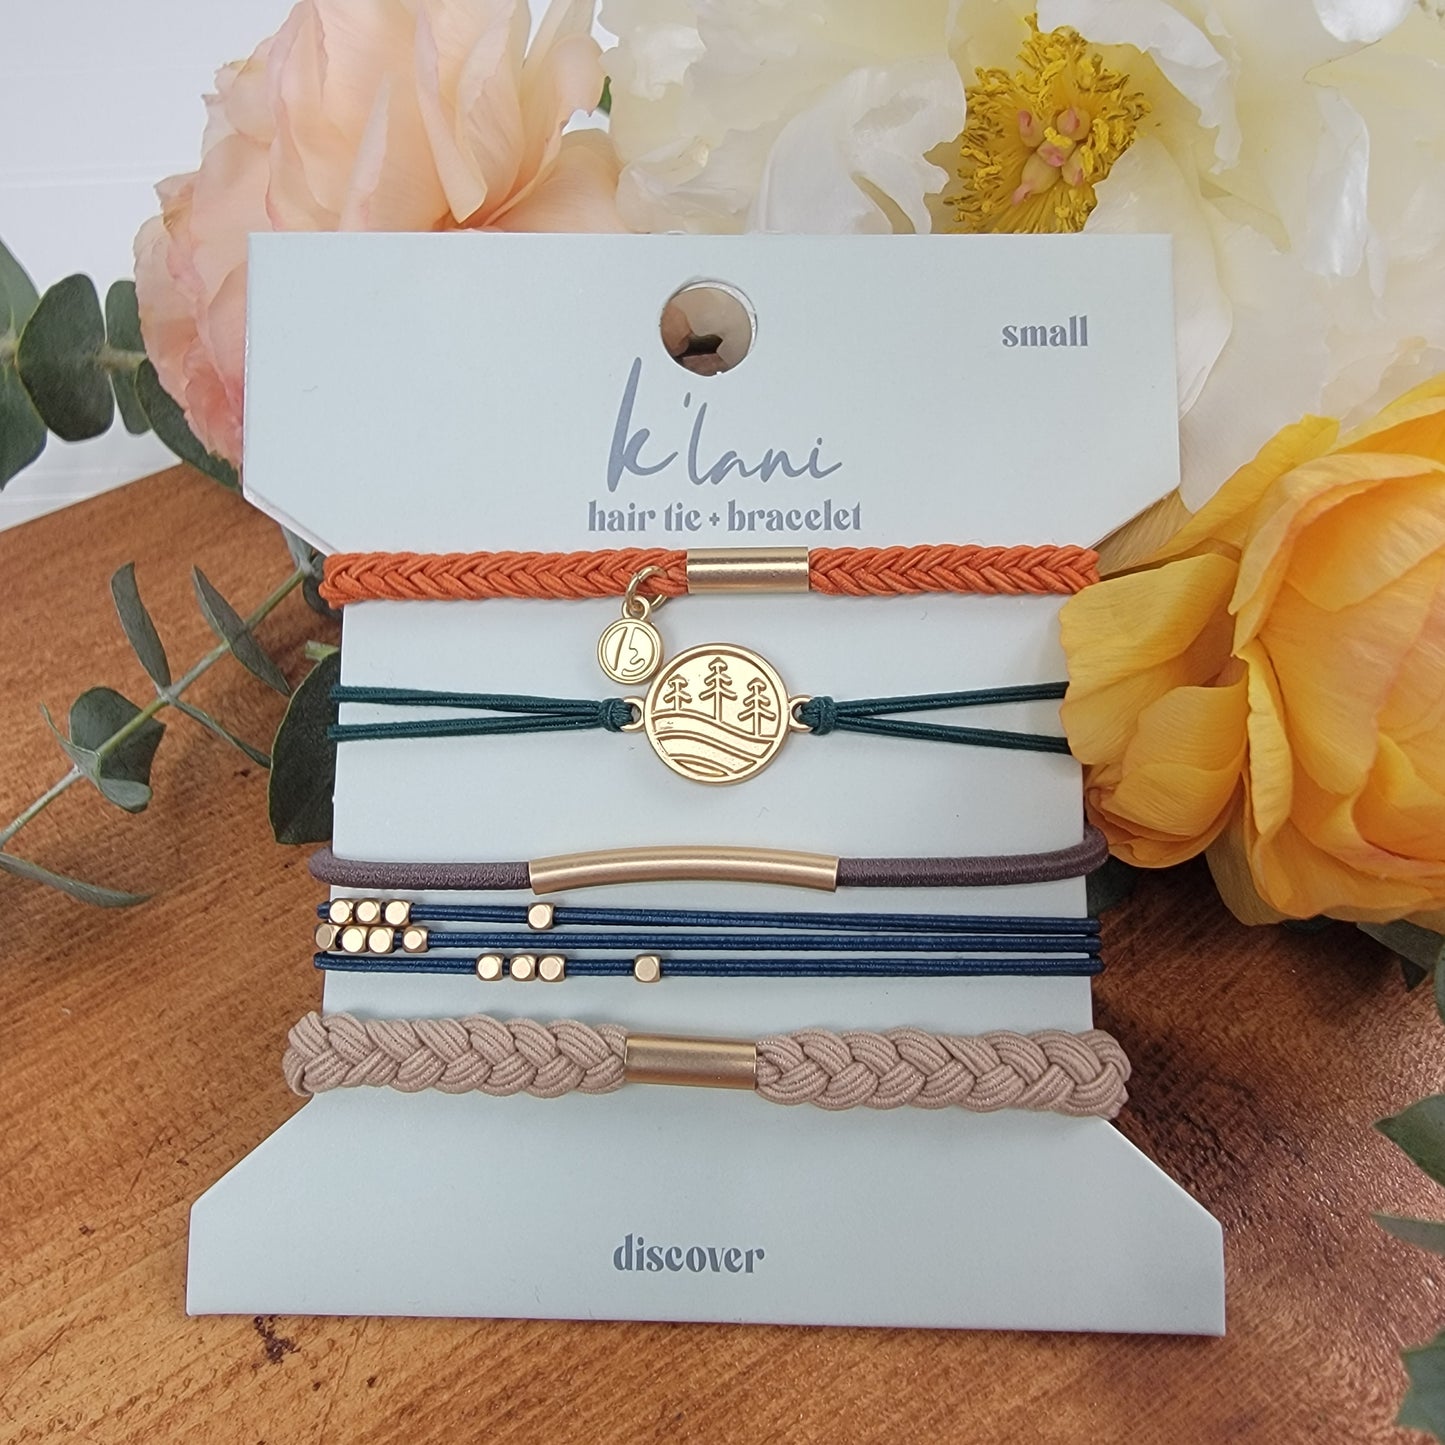 K'lani Hair Tie Bracelet Sets